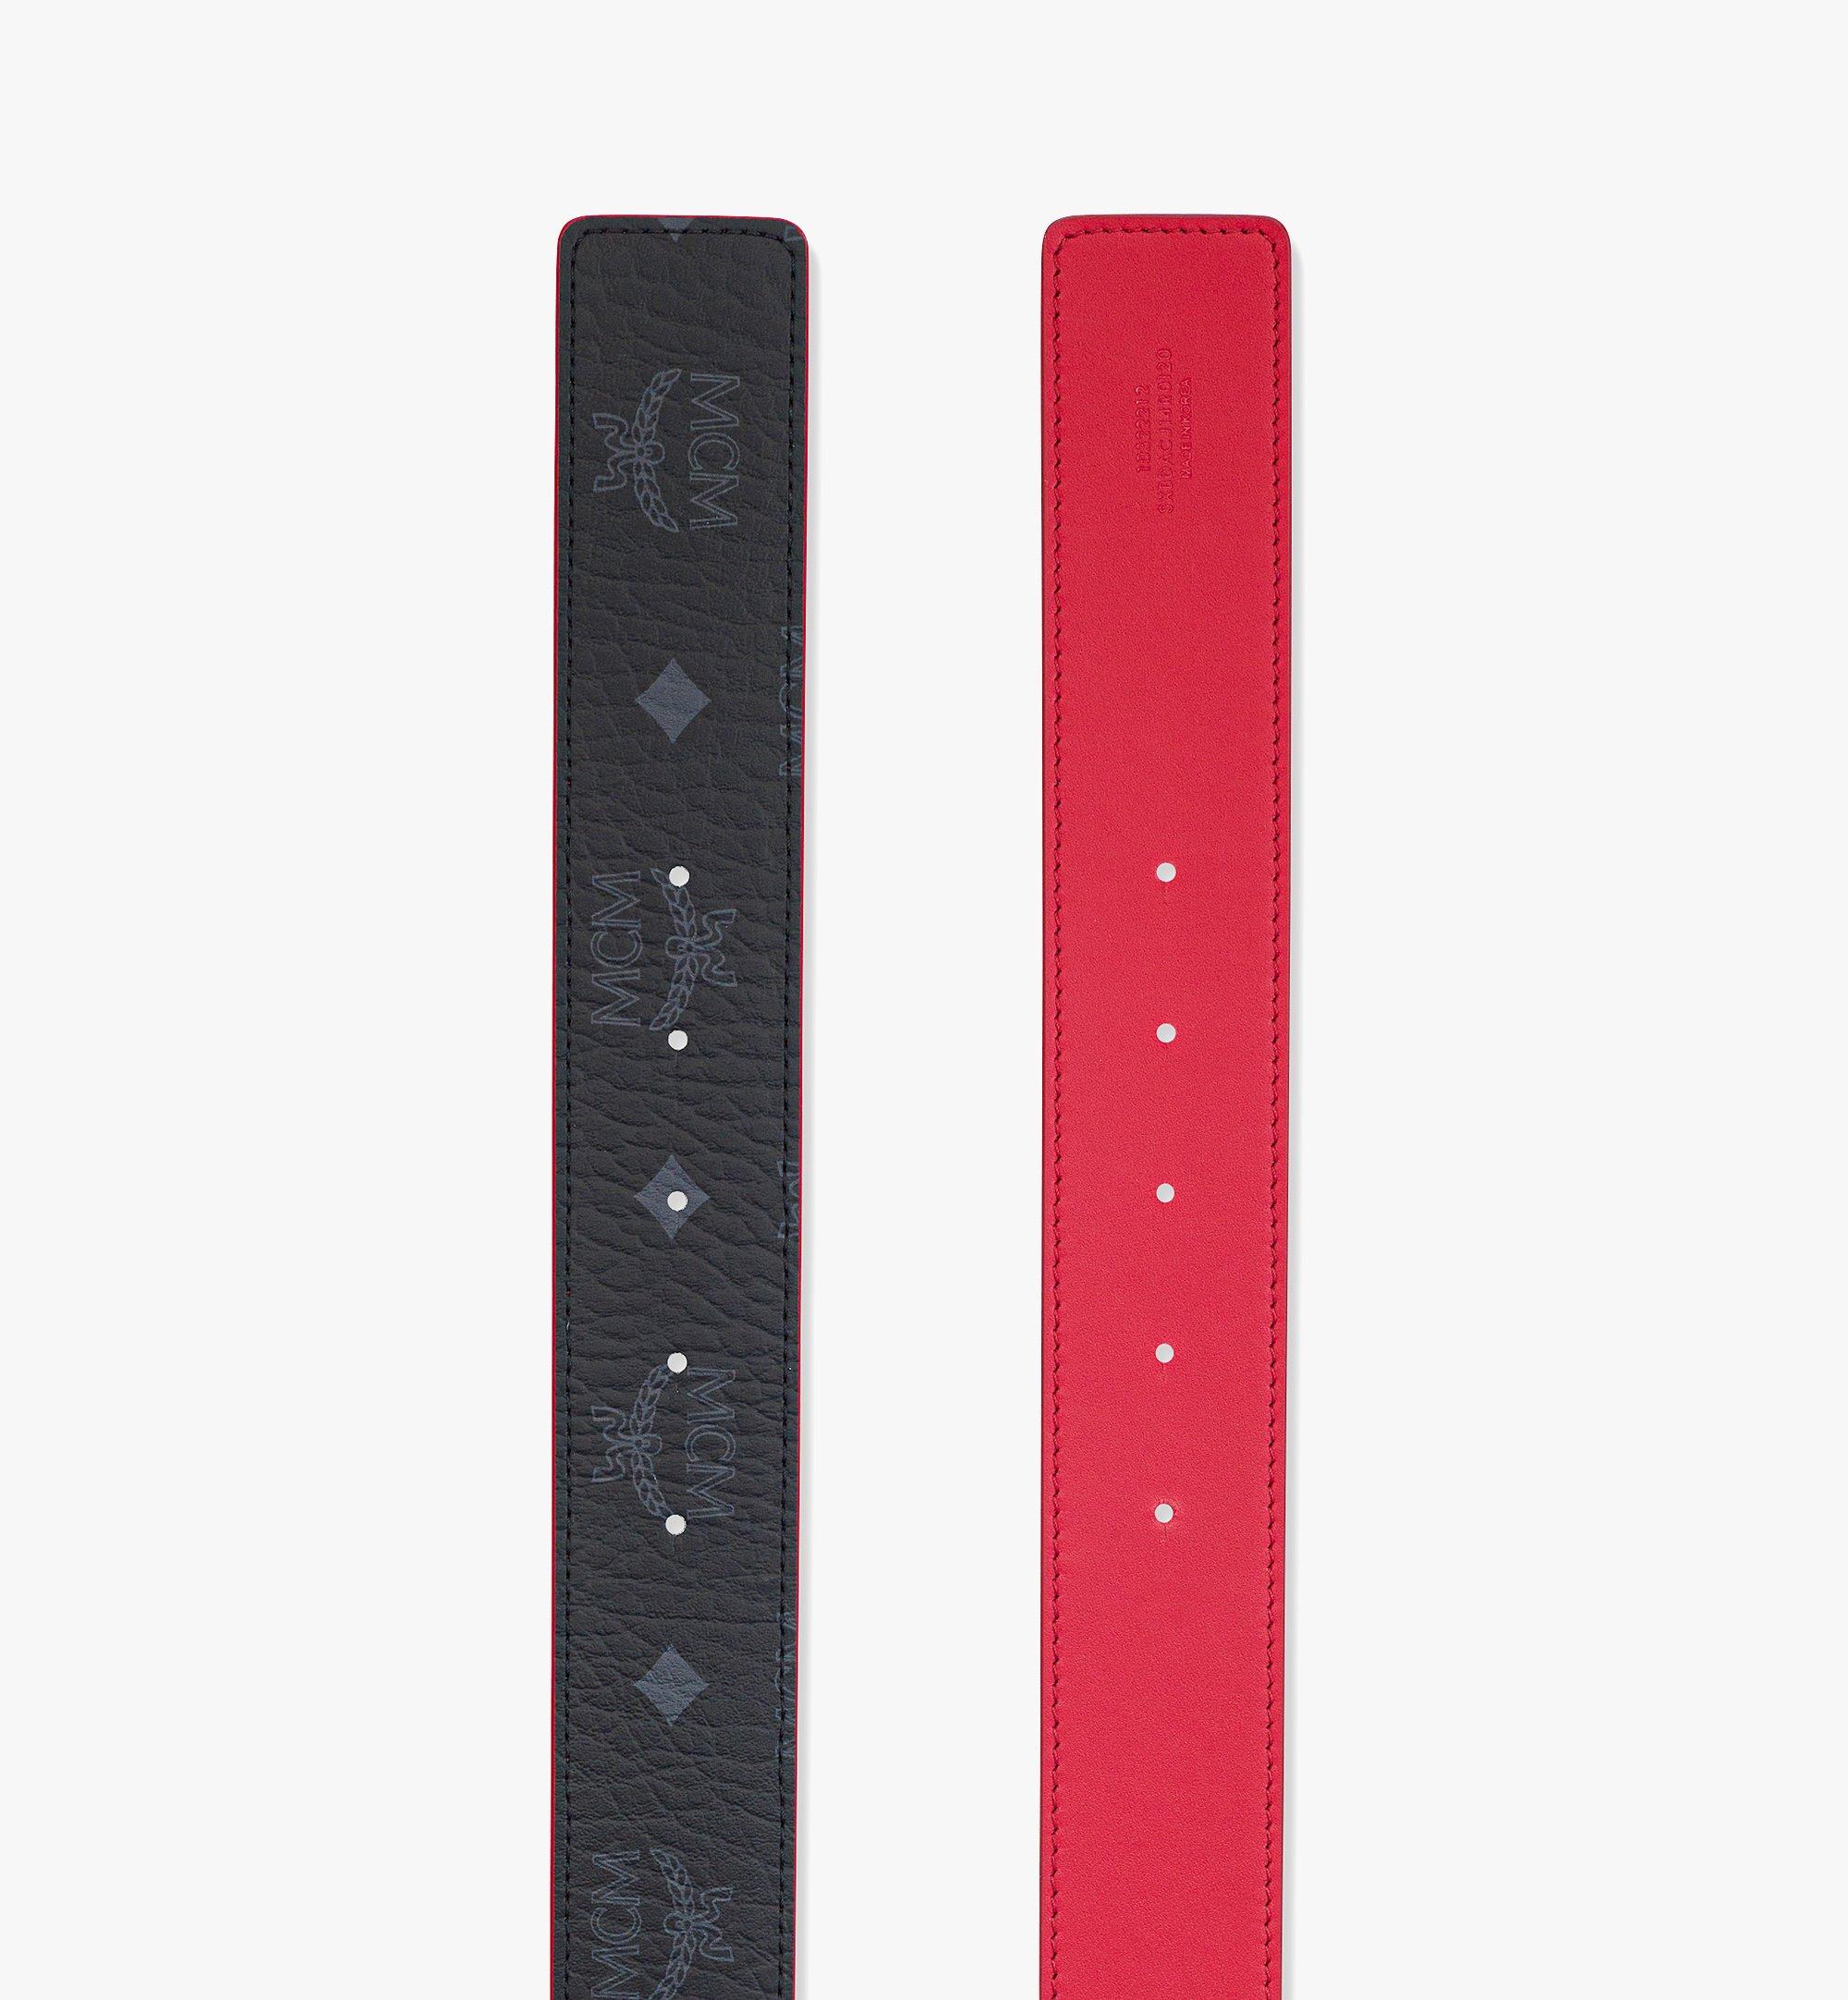 100cm / 39.3 Claus Tonal M Reversible Belt 1.2” Pink